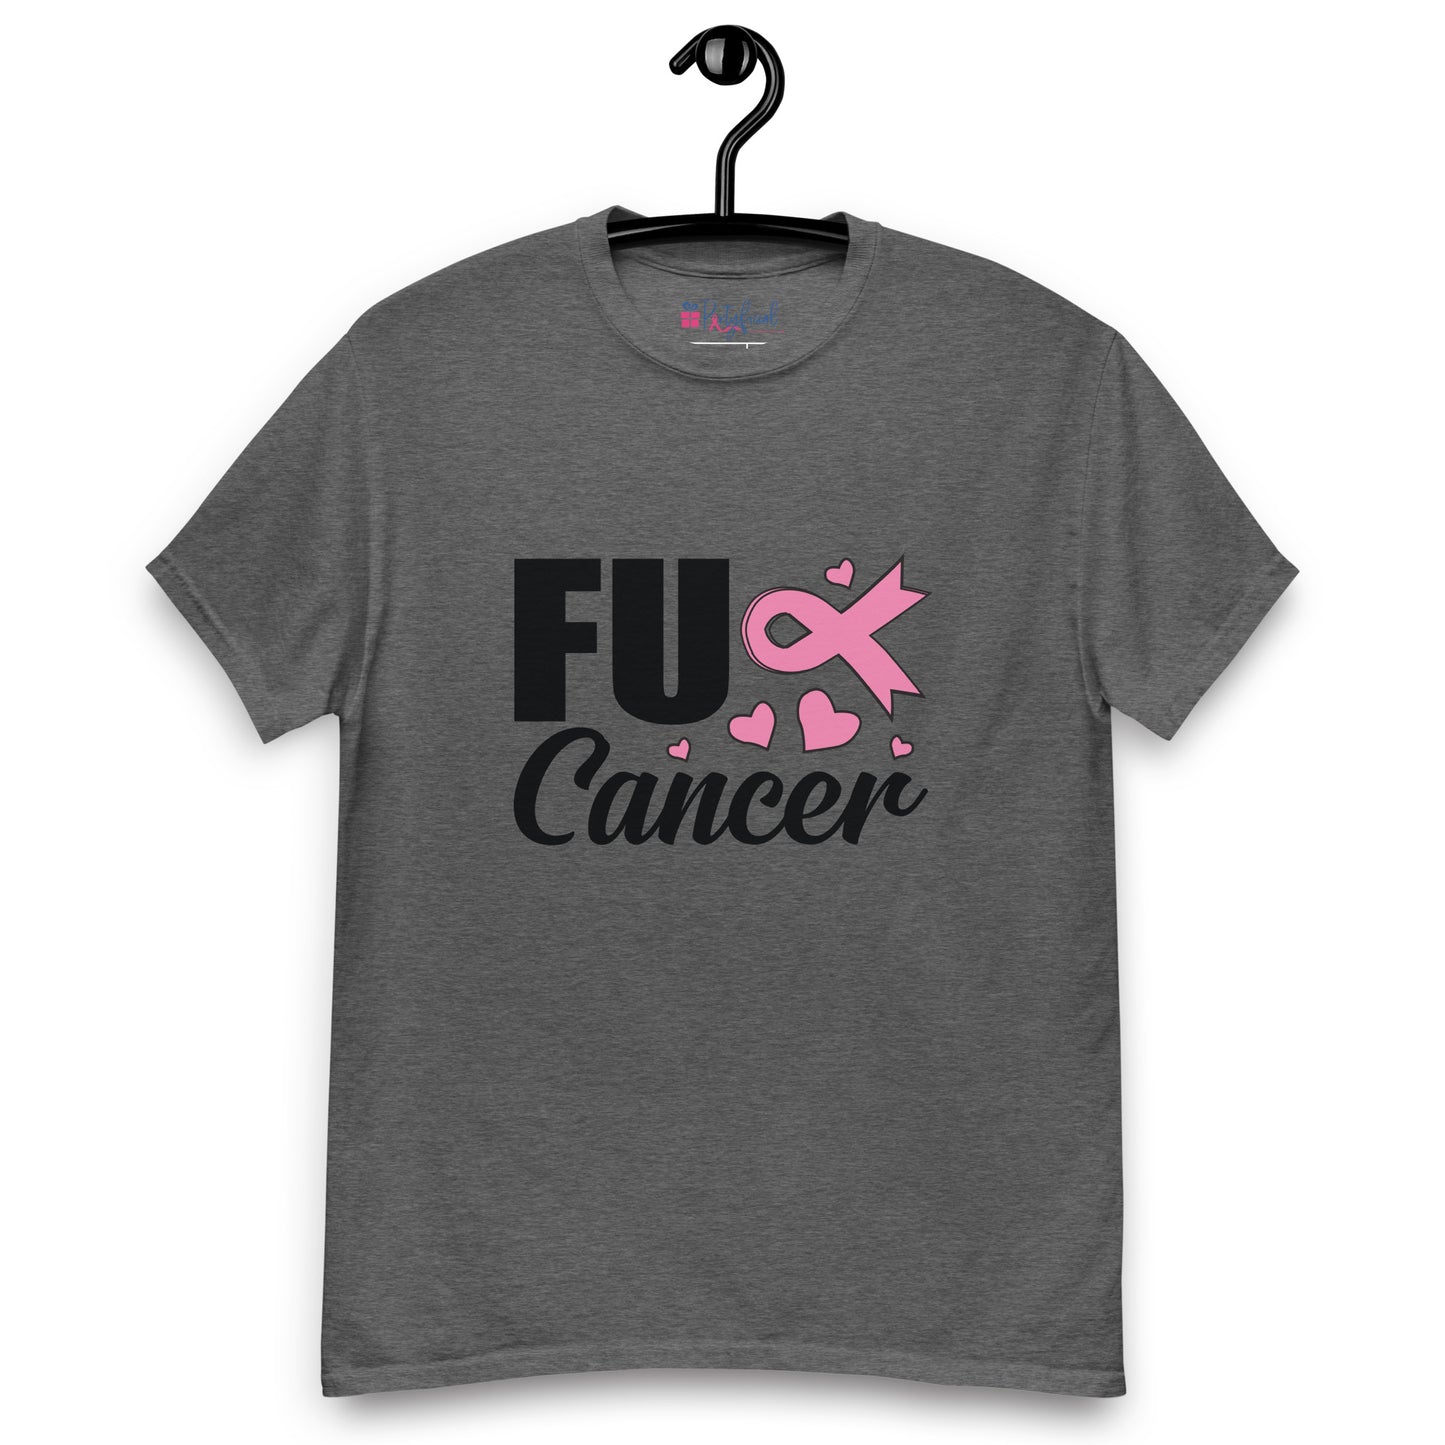 Fux Cancer tee